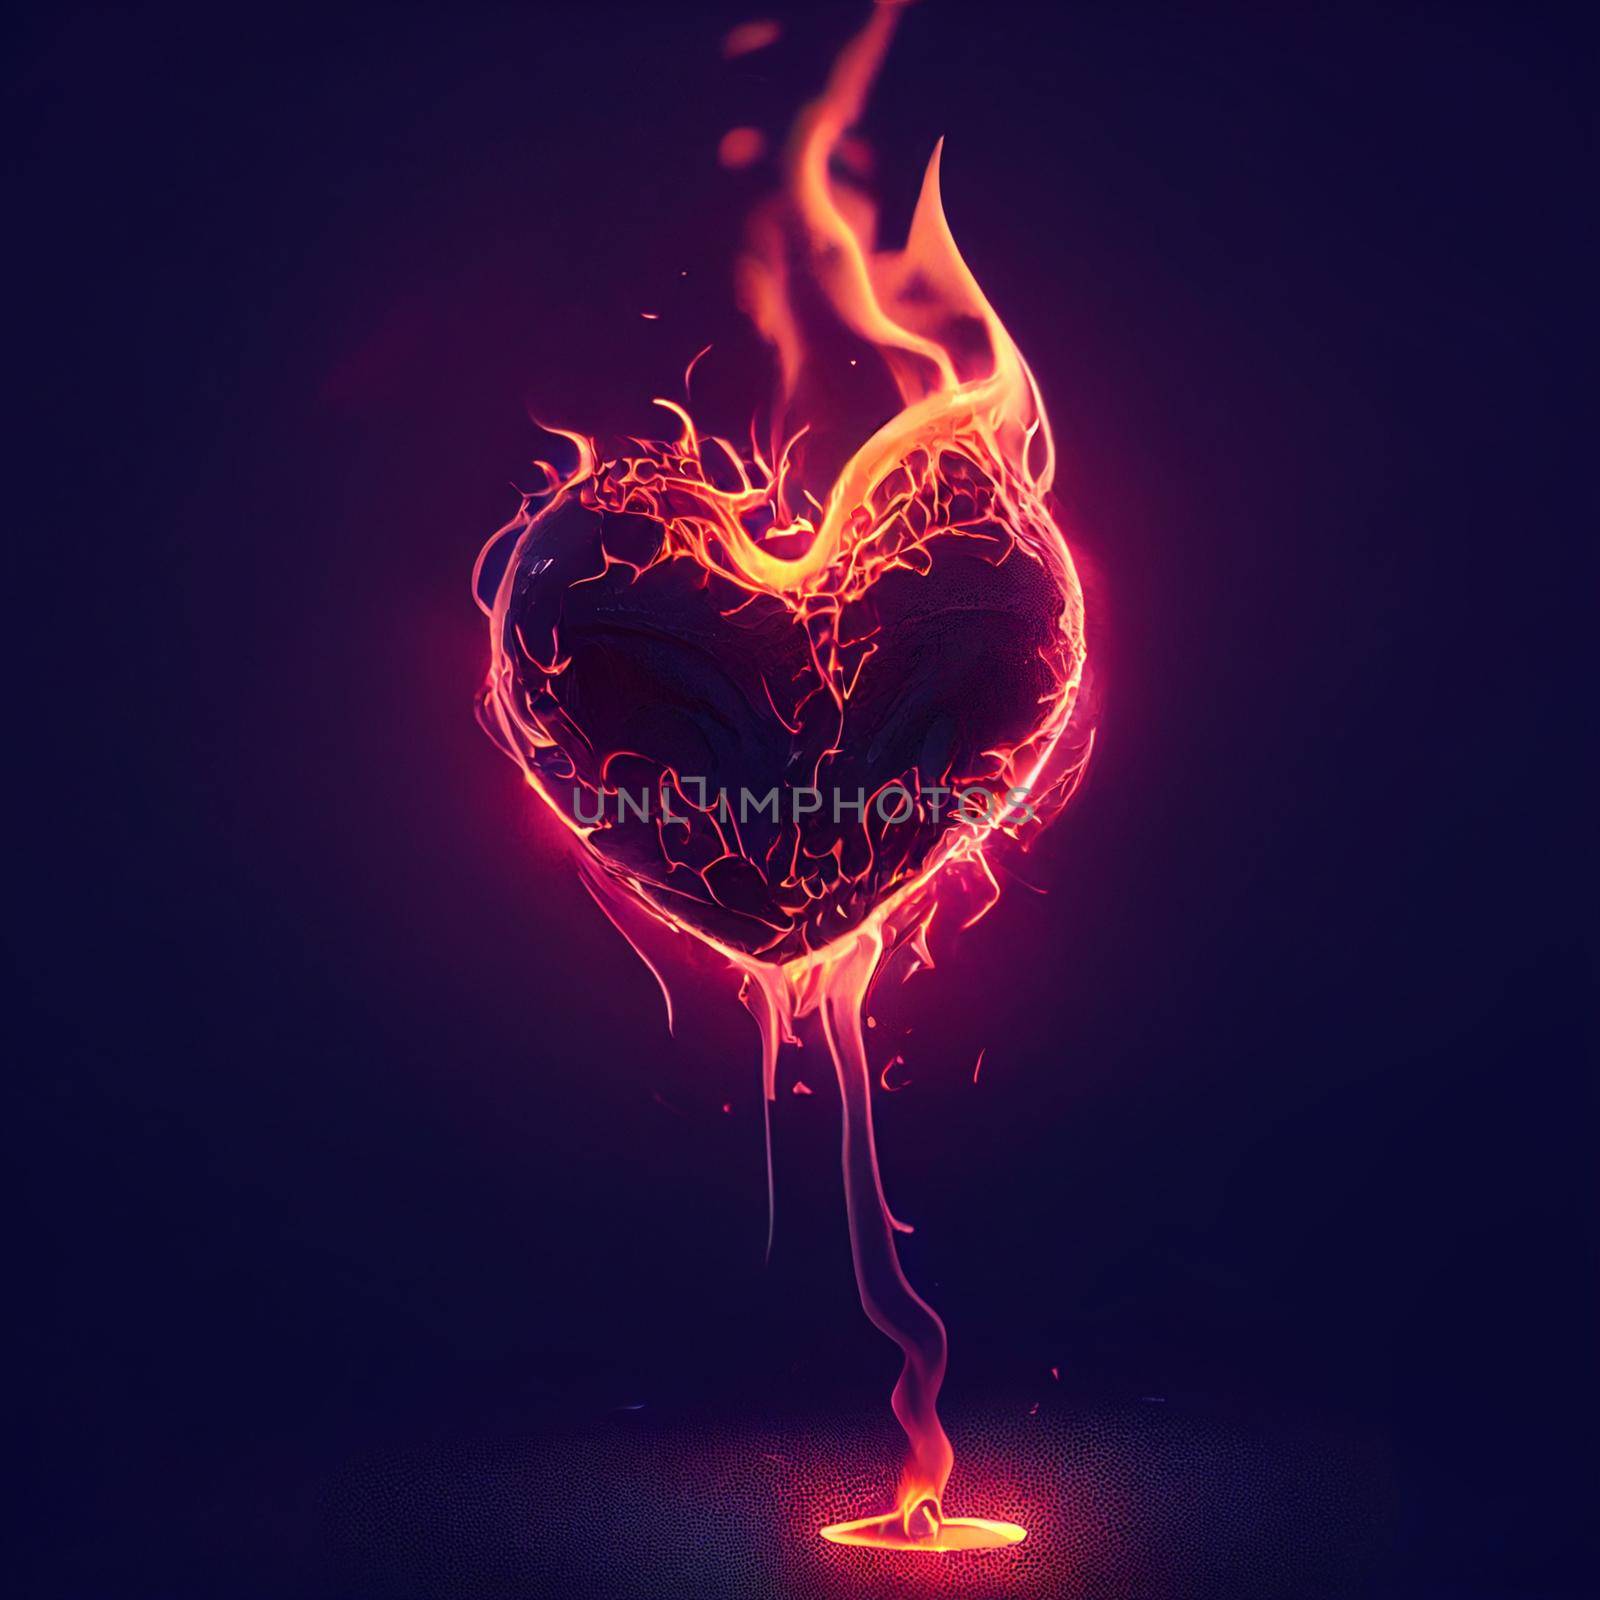 The Burning Heart by NeuroSky